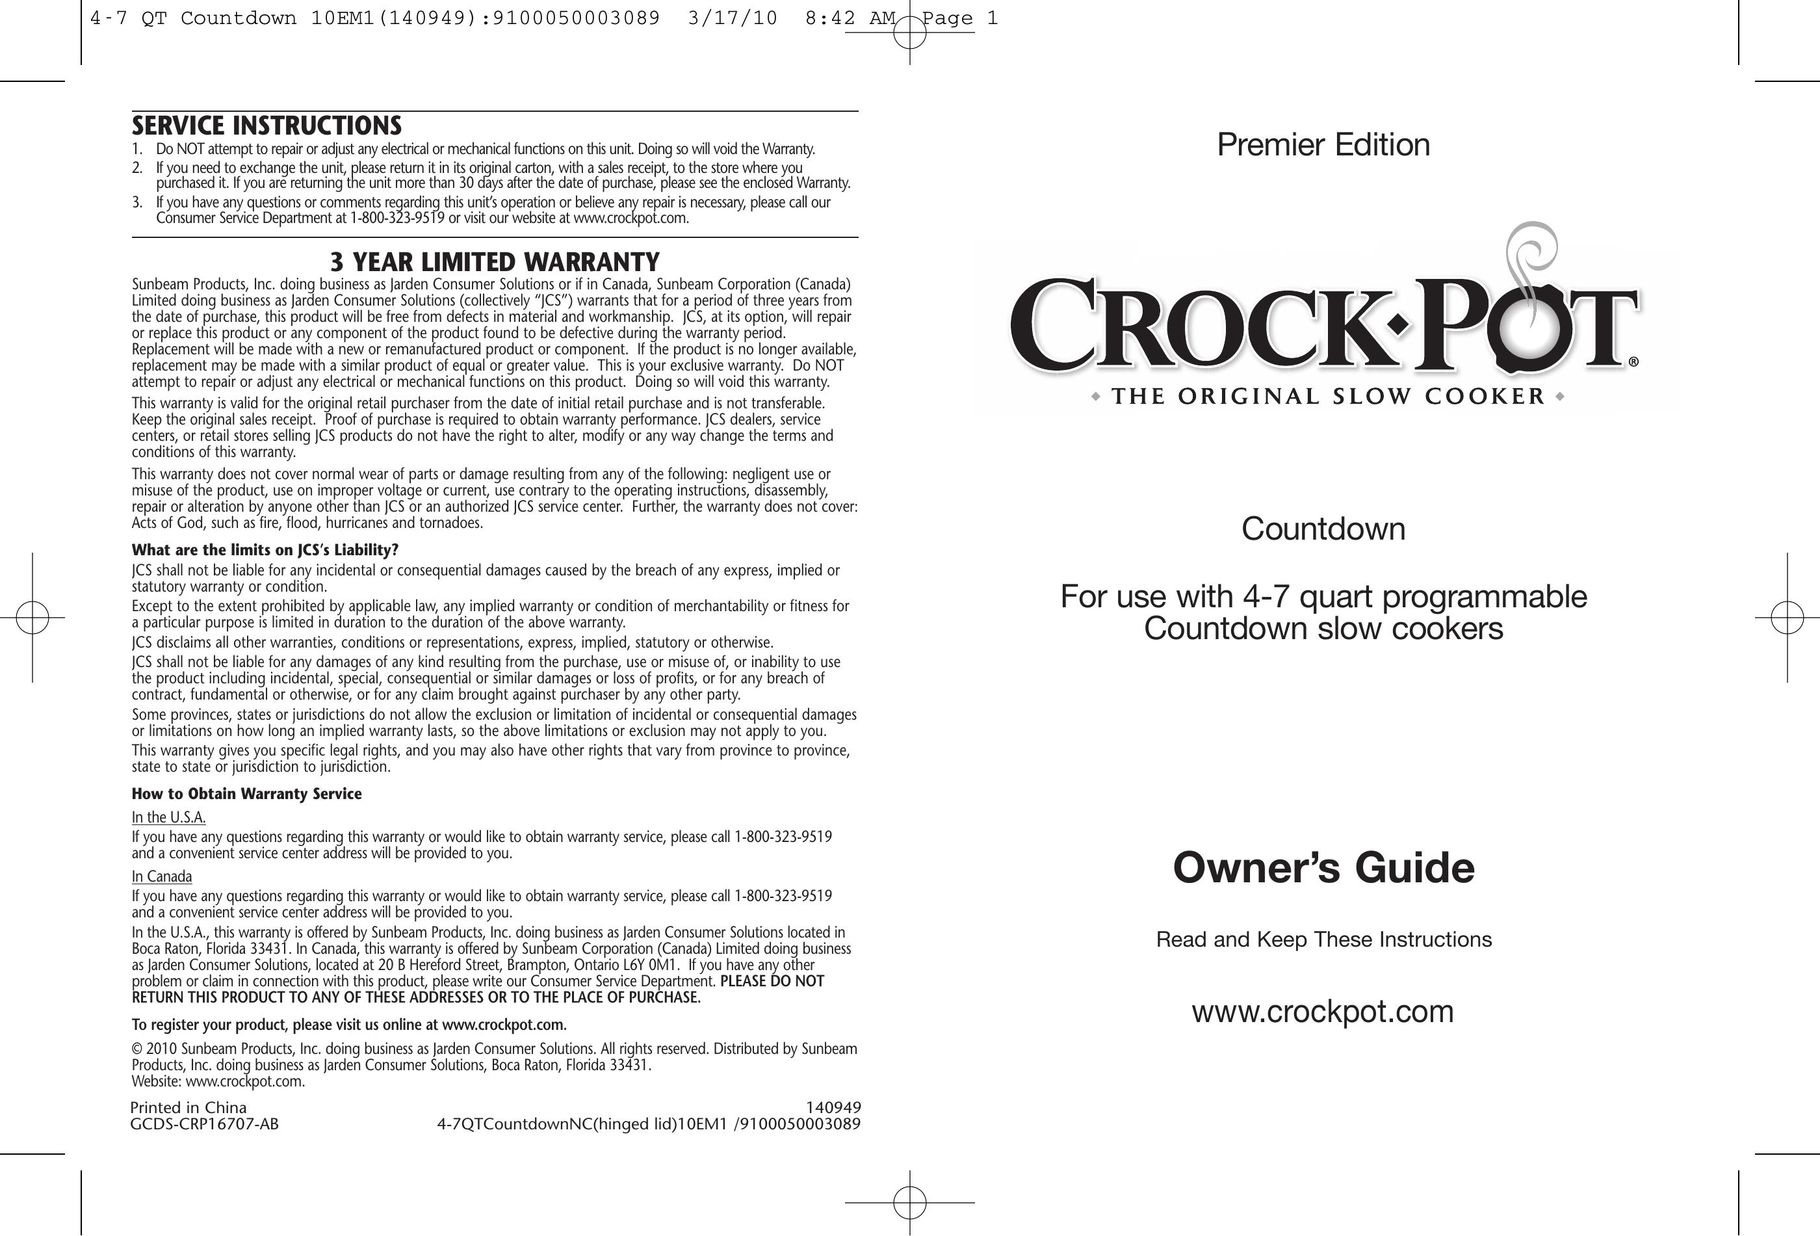 Crock-Pot Countdownn 4-7 Quart Cooktop User Manual